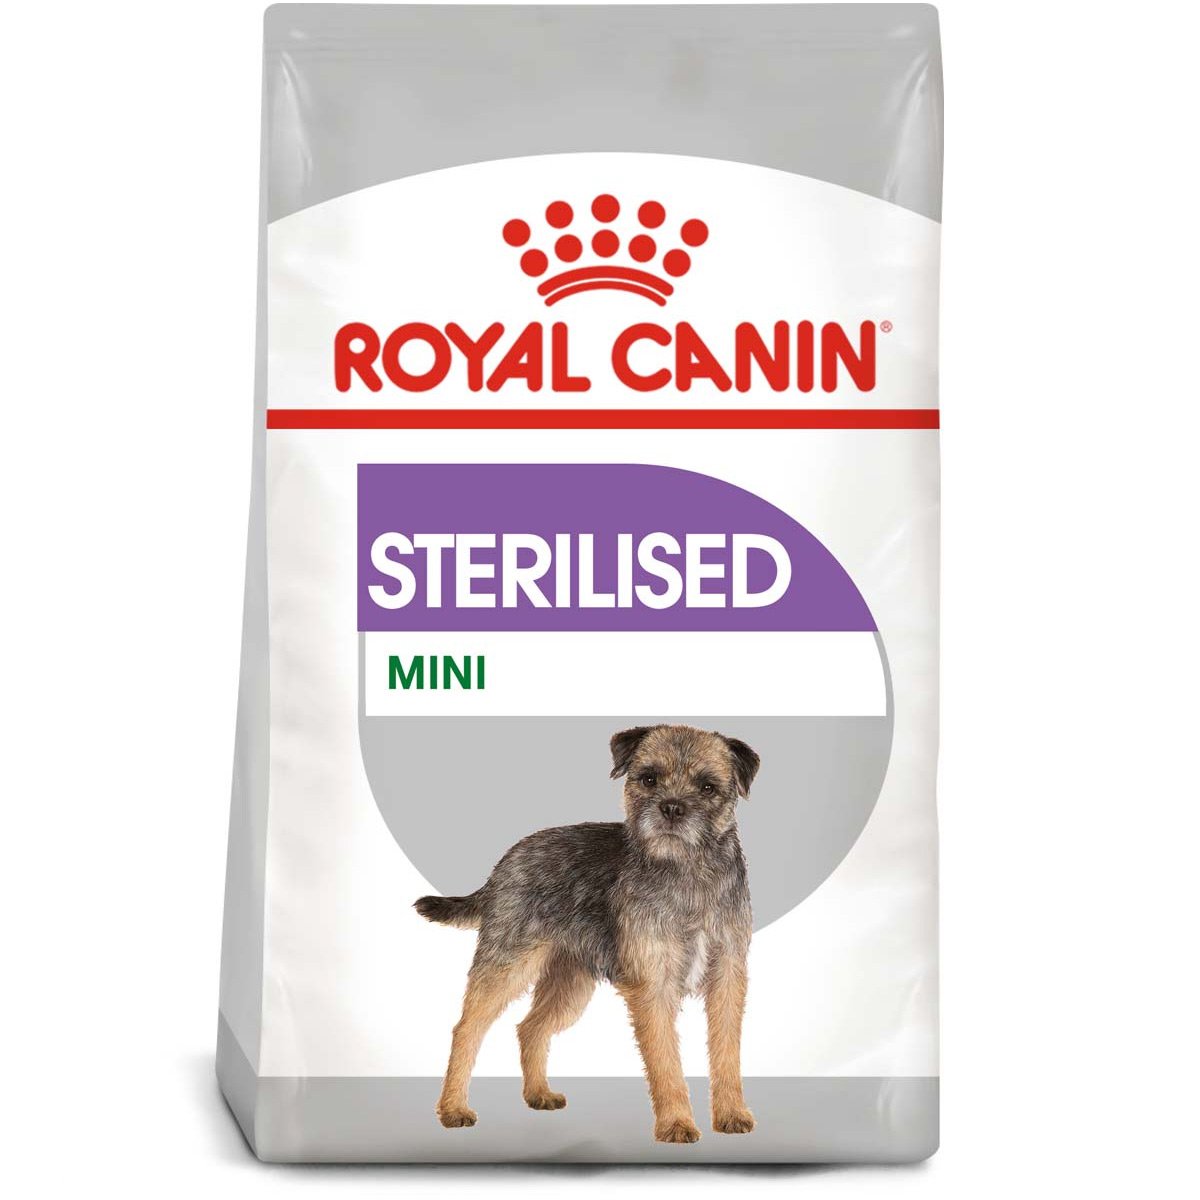 ROYAL CANIN STERILISED MINI Trockenfutter für kastrierte kleine Hunde 2x8kg von Royal Canin